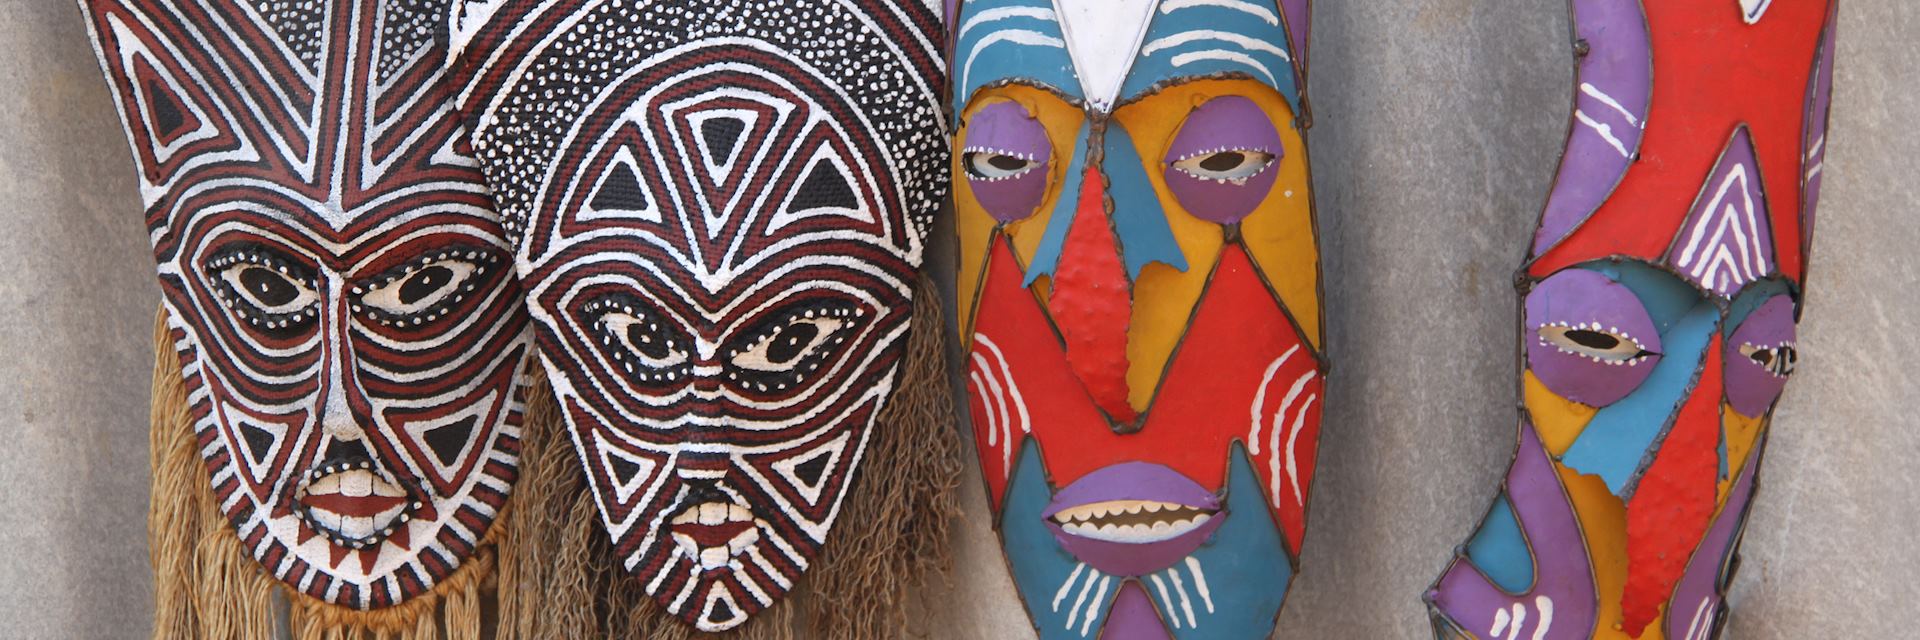 Tribal masks in a zimbabwean market